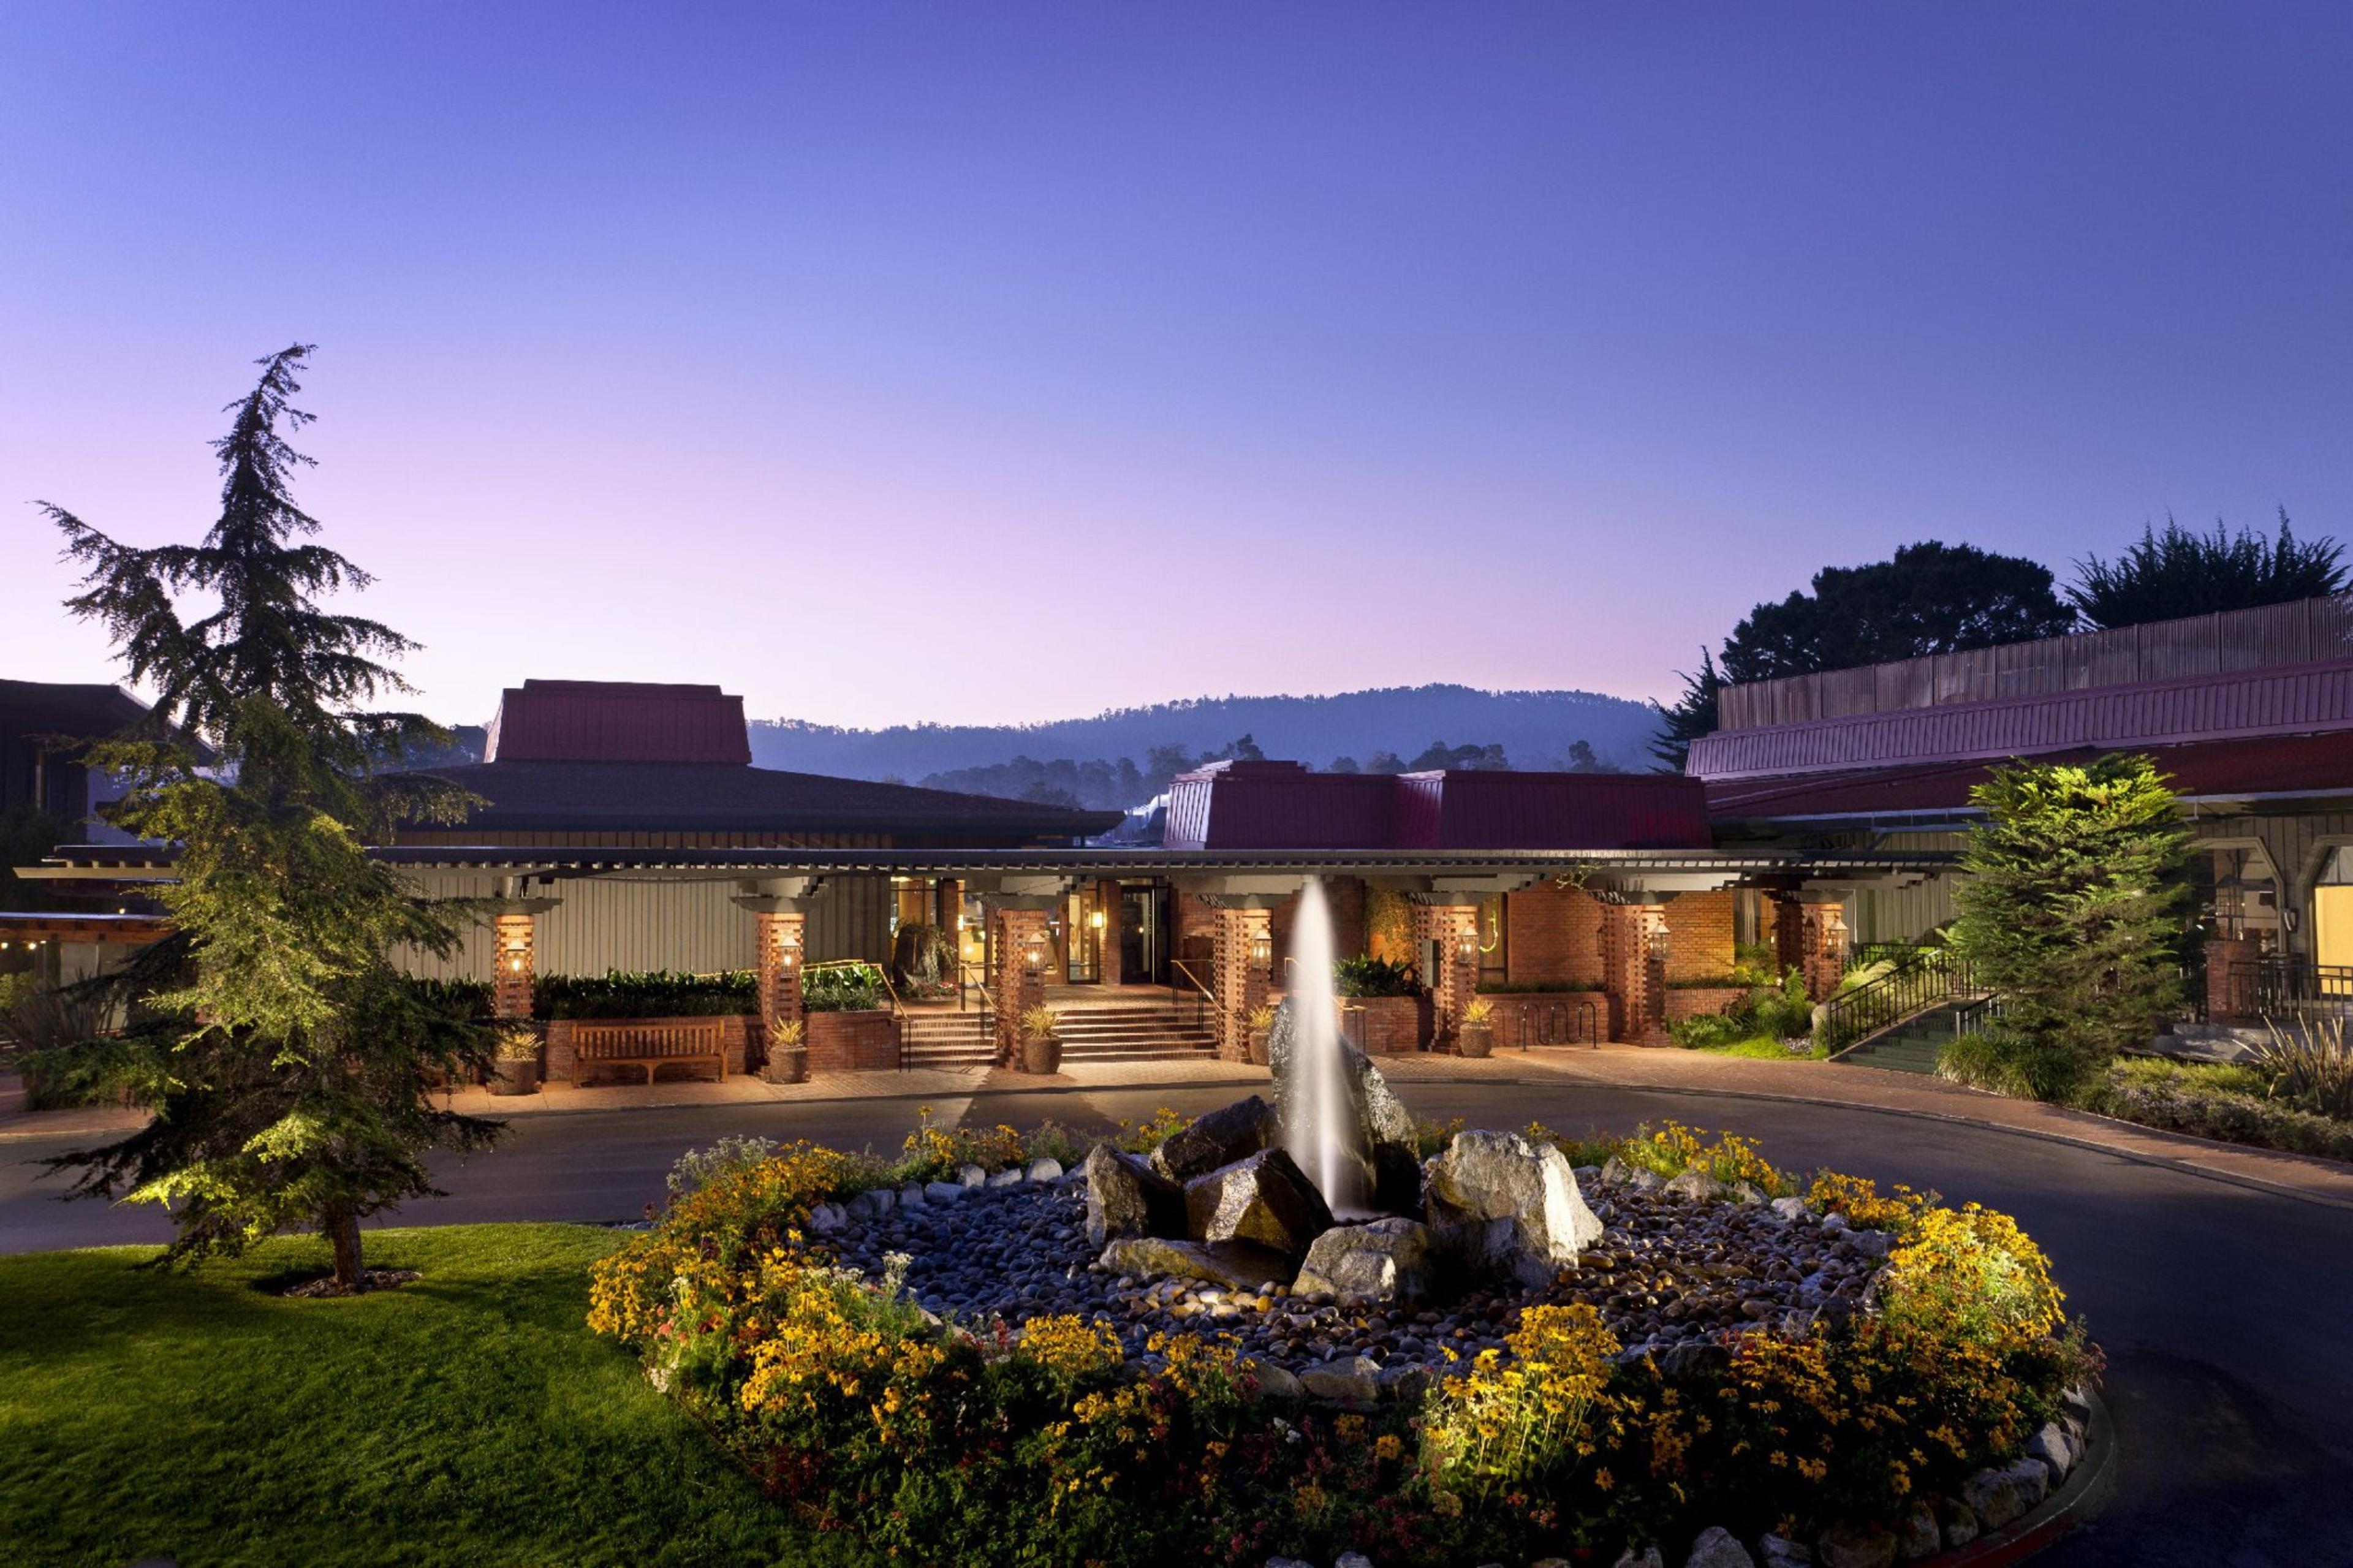 Hyatt Regency Monterey Hotel and Spa on Del Monte Golf Course